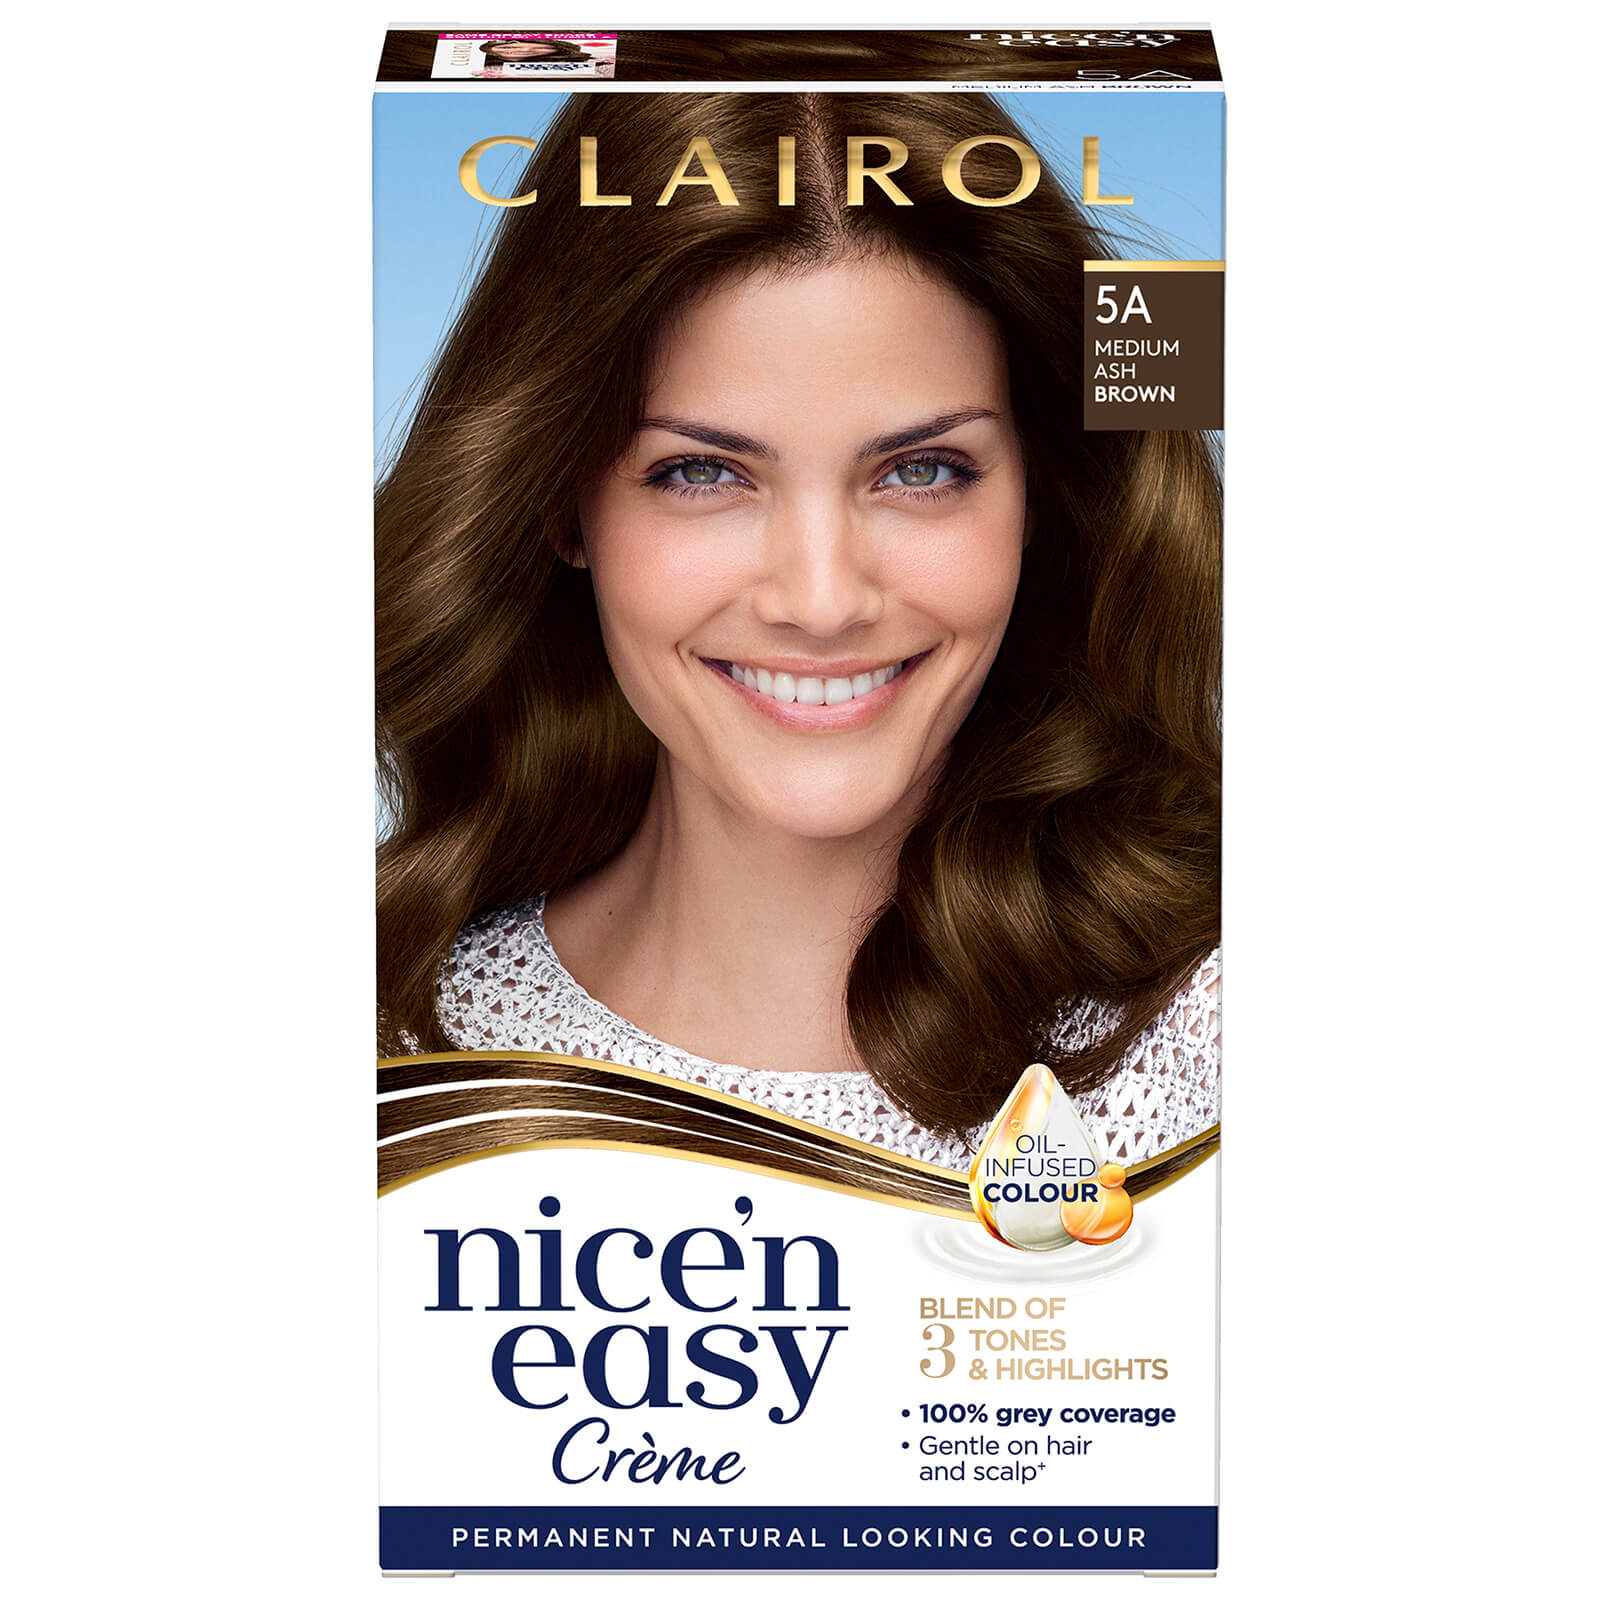 Clairol Nice' n Easy Crème Natural Looking Oil Infused Permanent Hair Dye 177ml (Various Shades) - 5A Medium Ash Brown